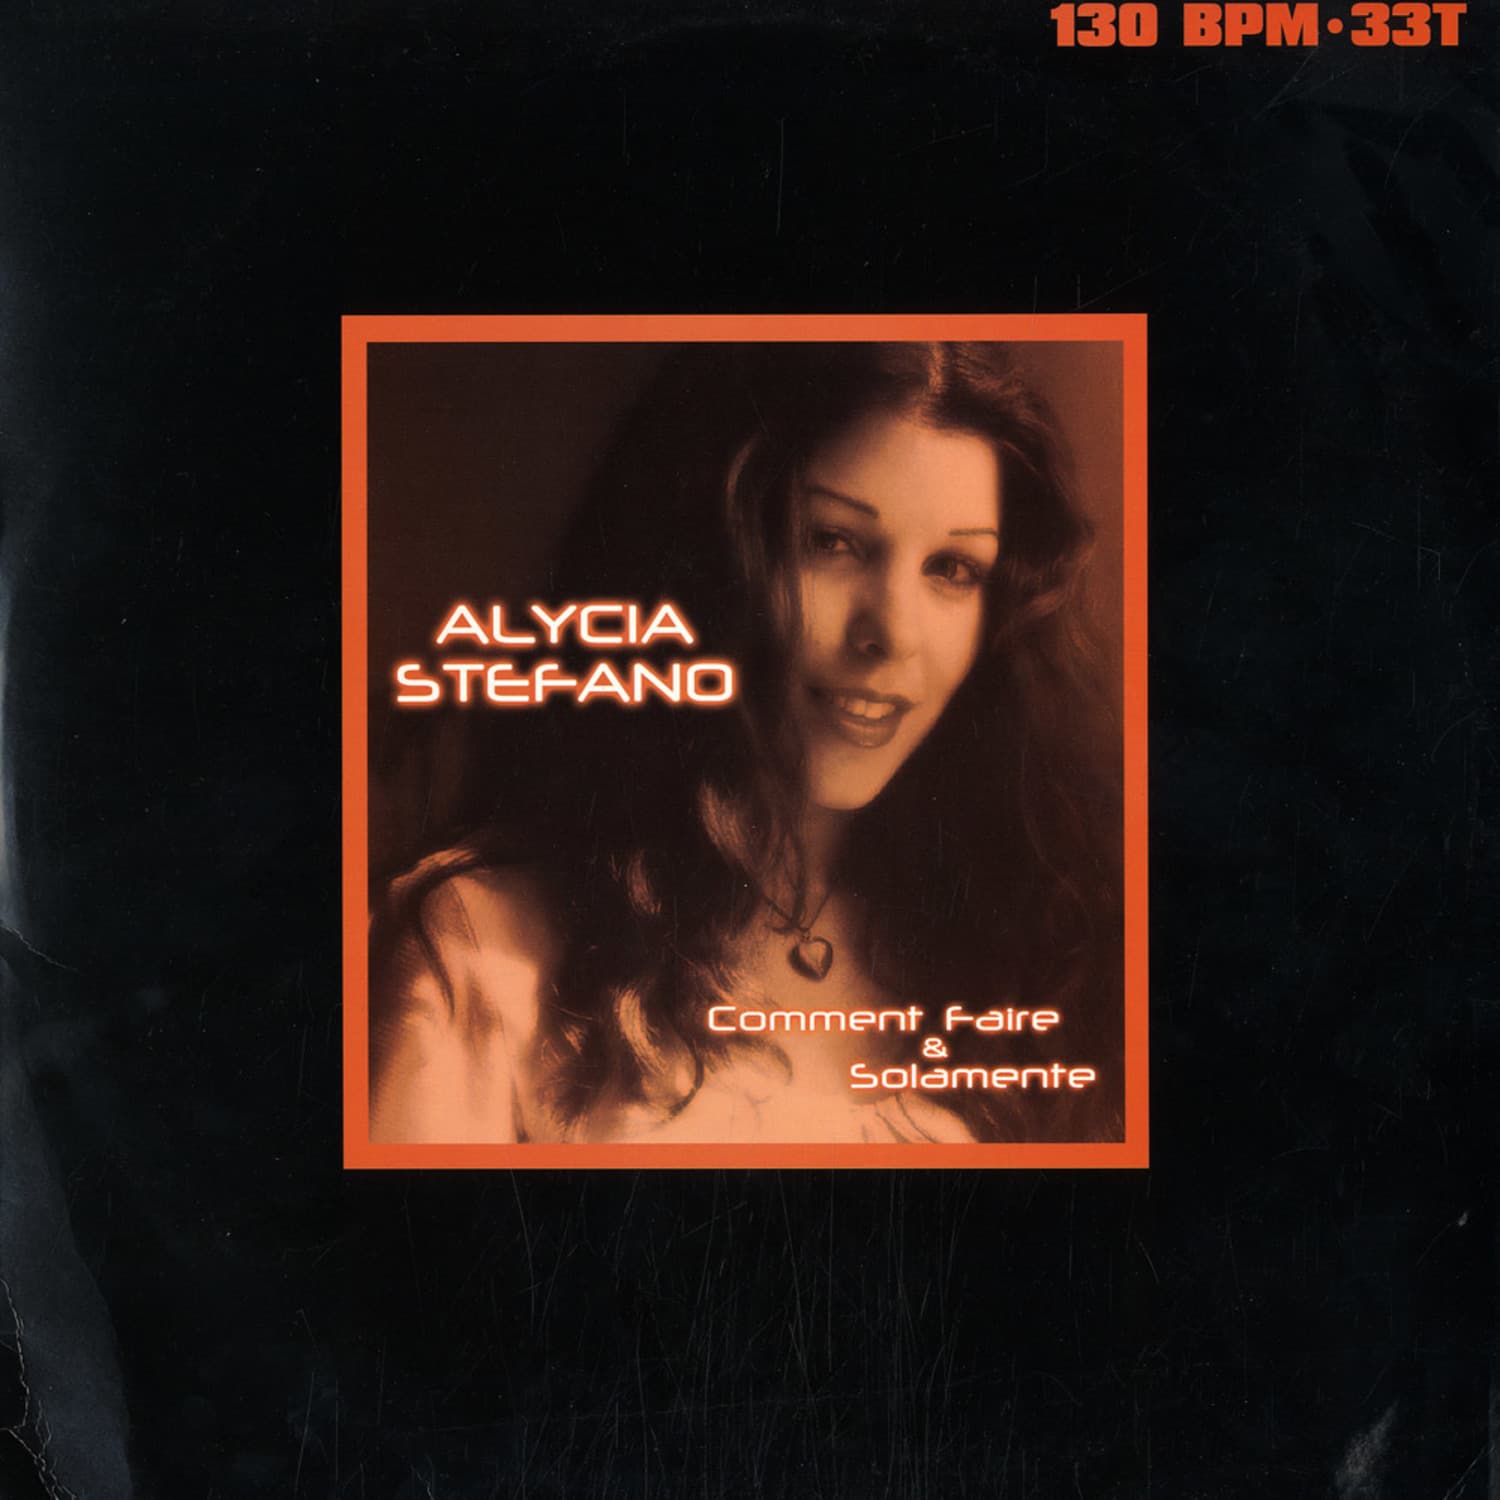 Alycia Stefano - COMMENT FAIRE